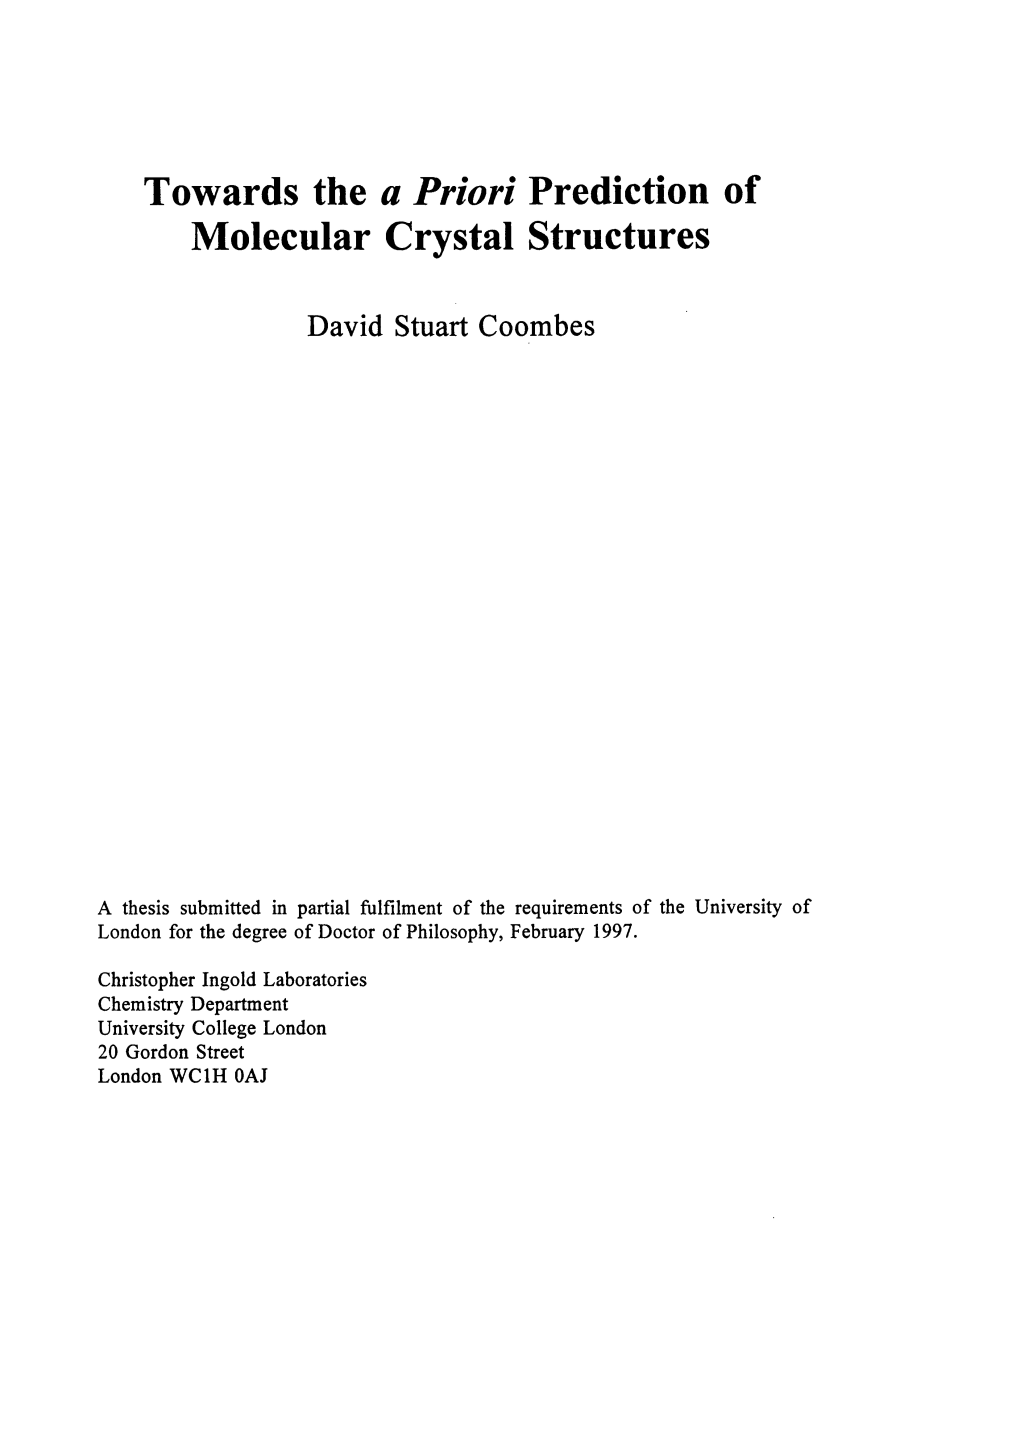 Towards the a Priori Prediction of Molecular Crystal Structures